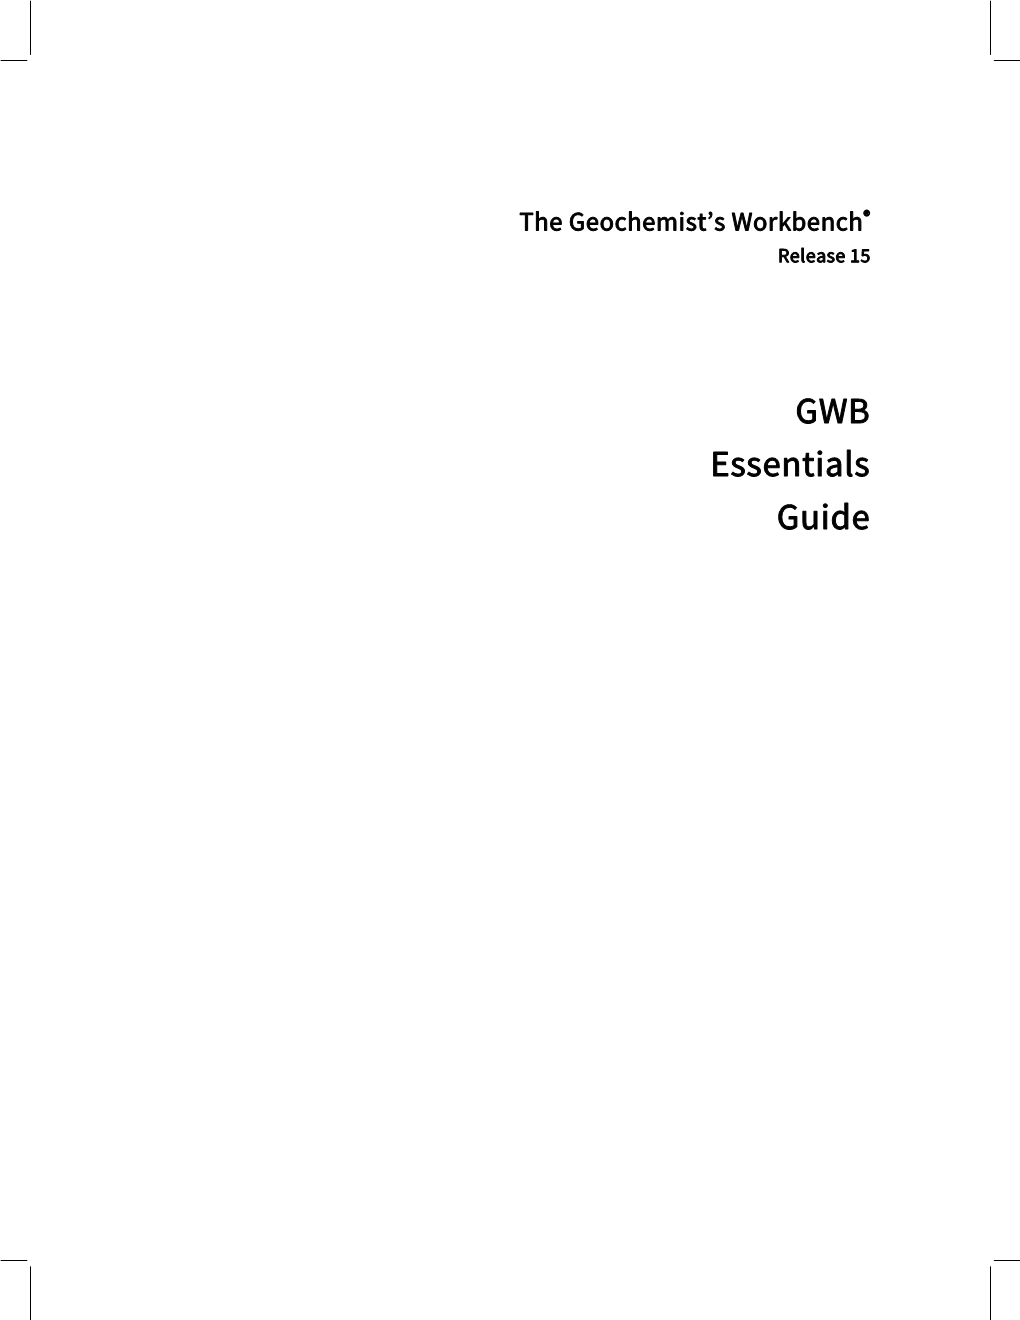 GWB Essentials Guide